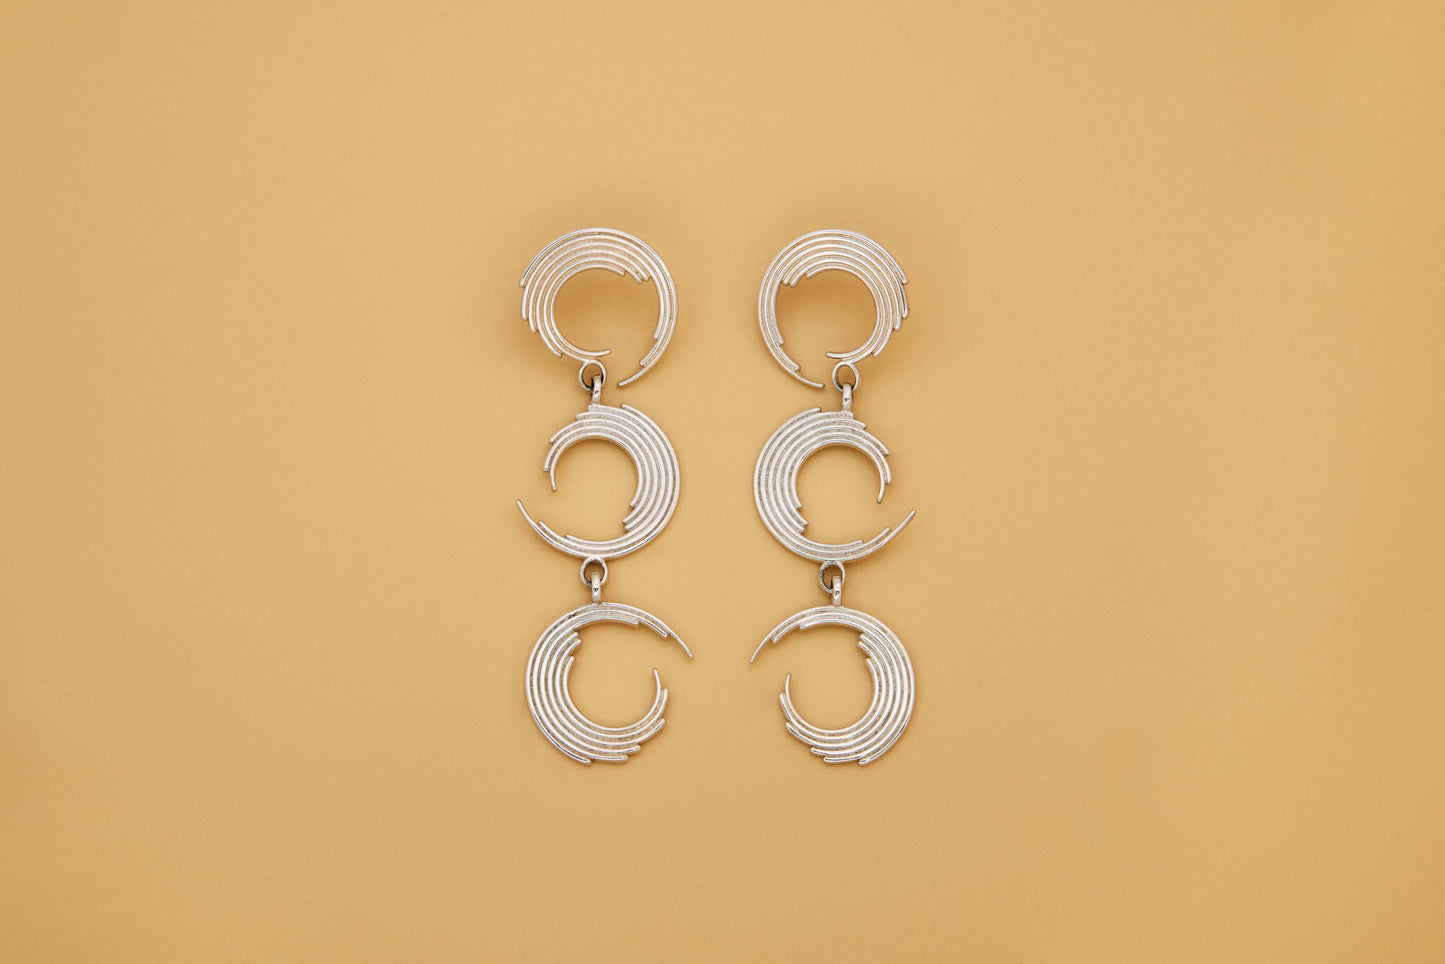 The Triple O Earrings